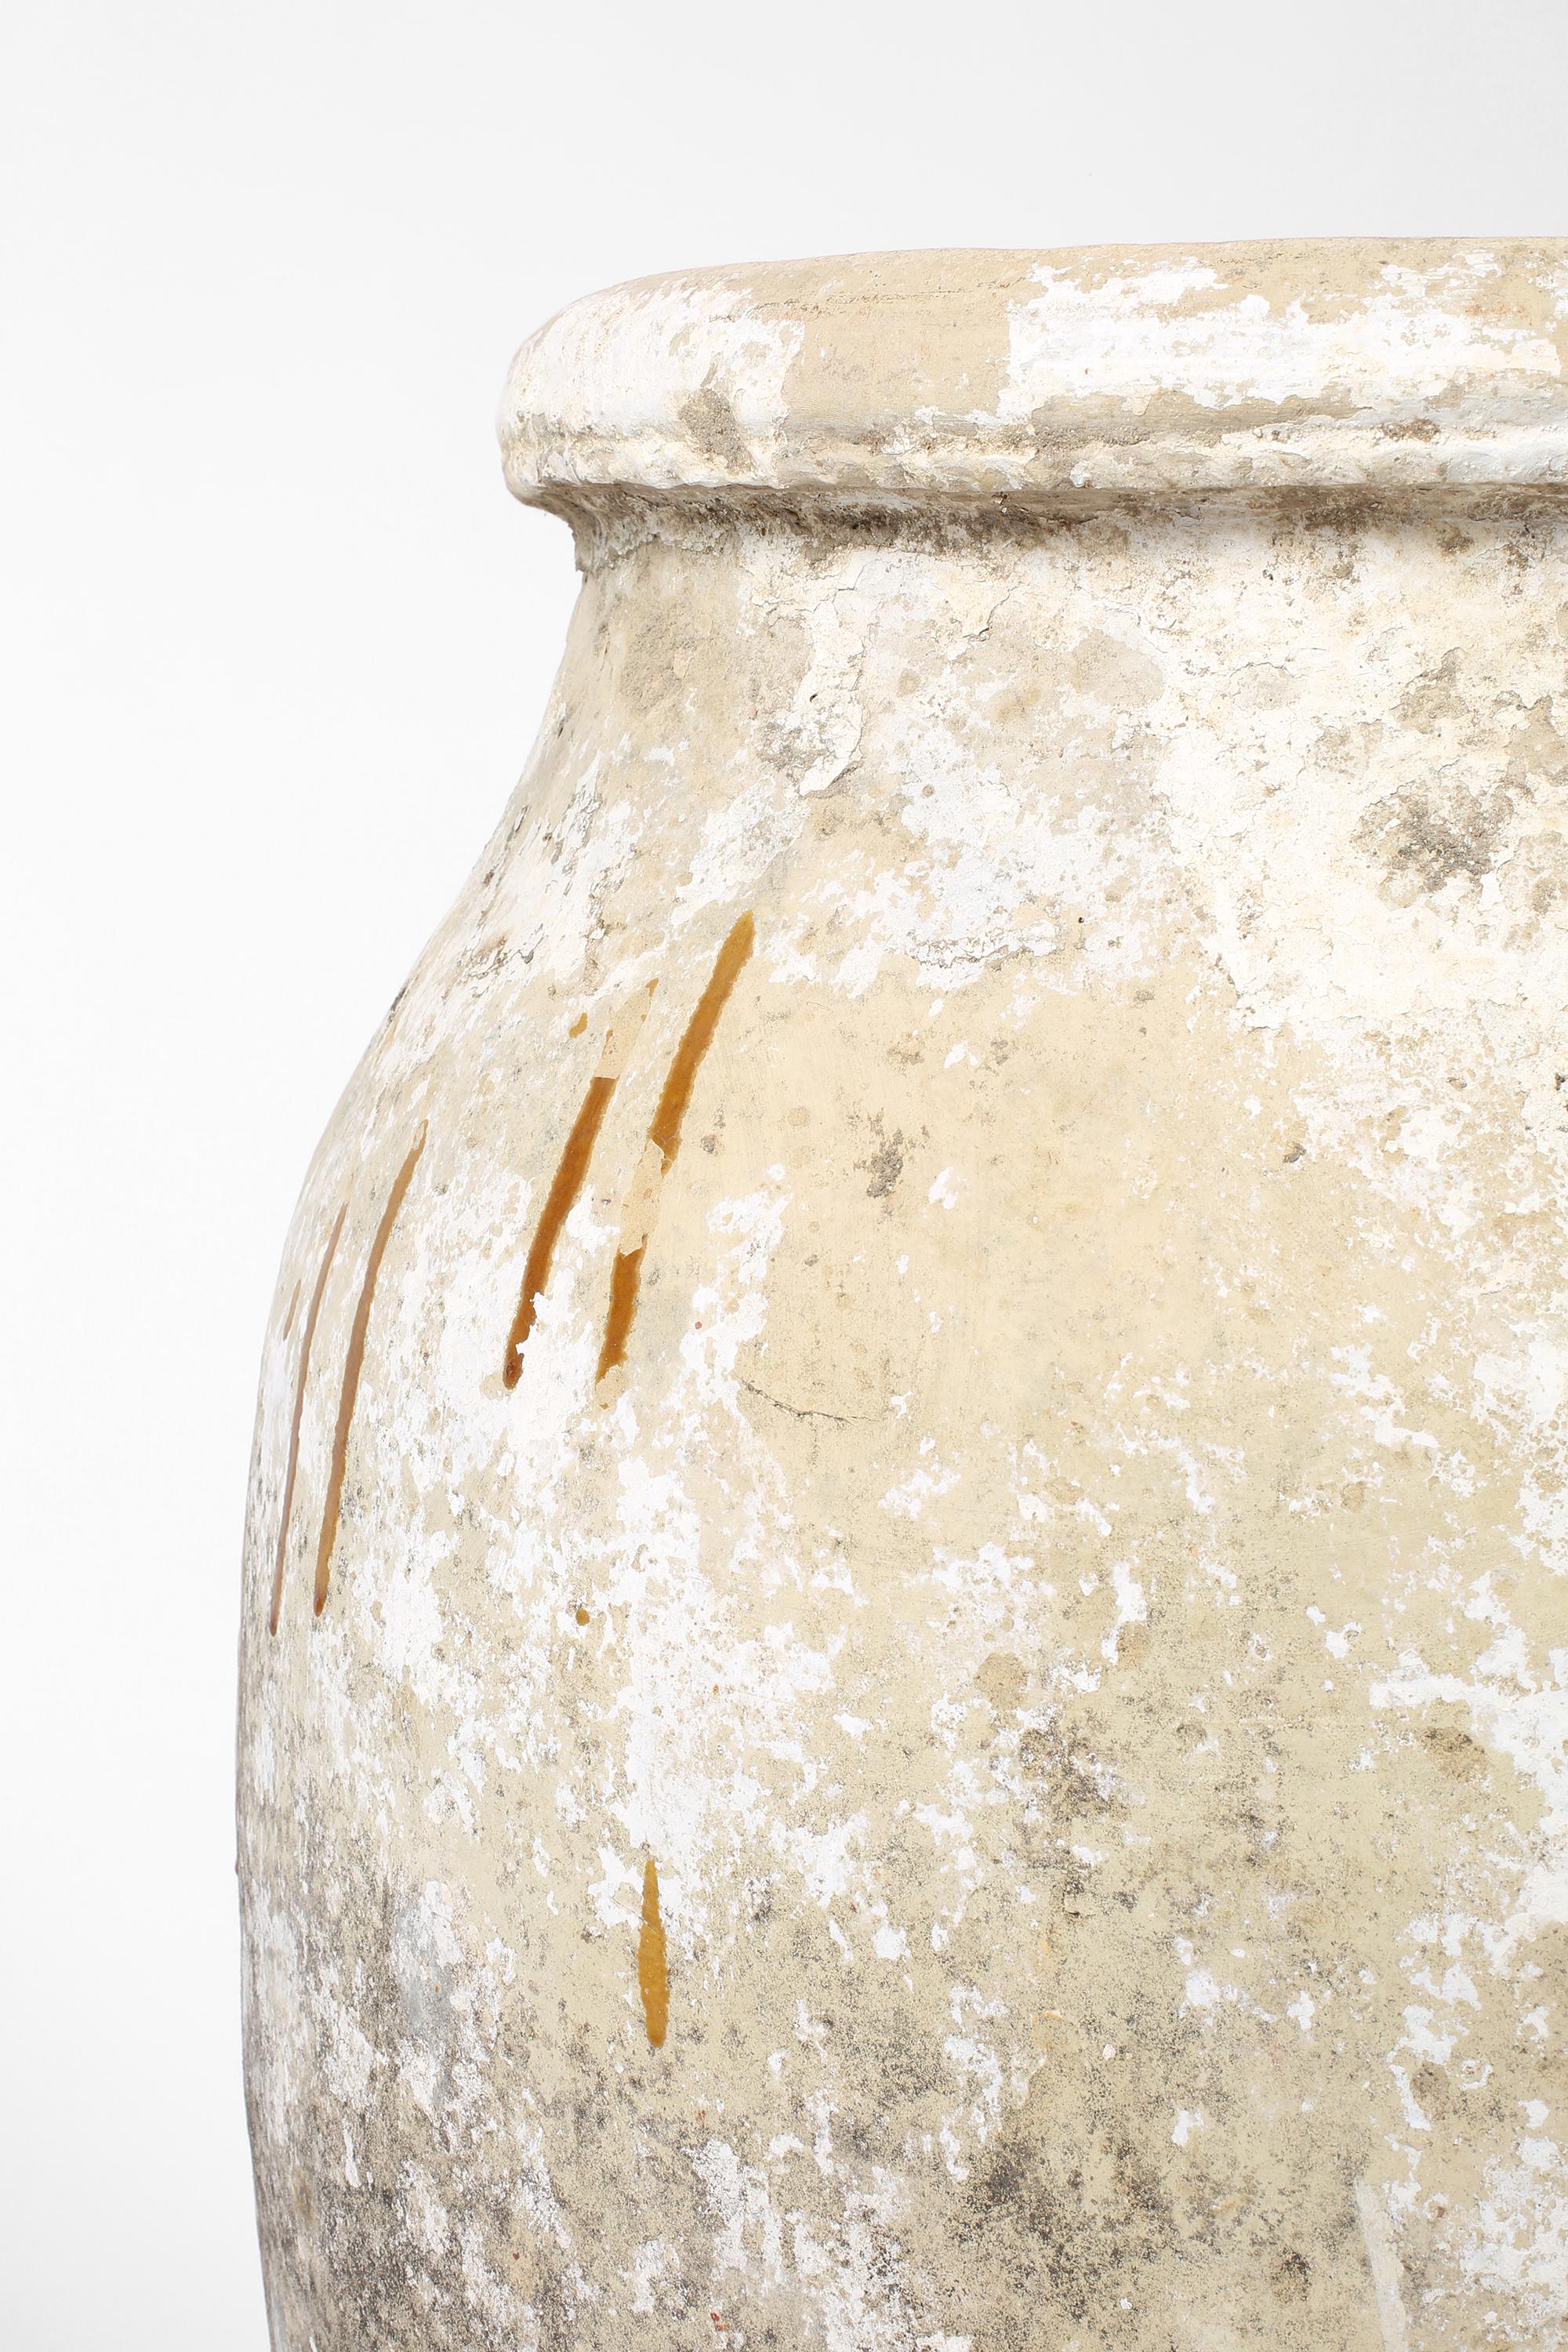 19th Century Large Stapled Southern Earthenware Wabi-Sabi Spanish Jar c. 1800